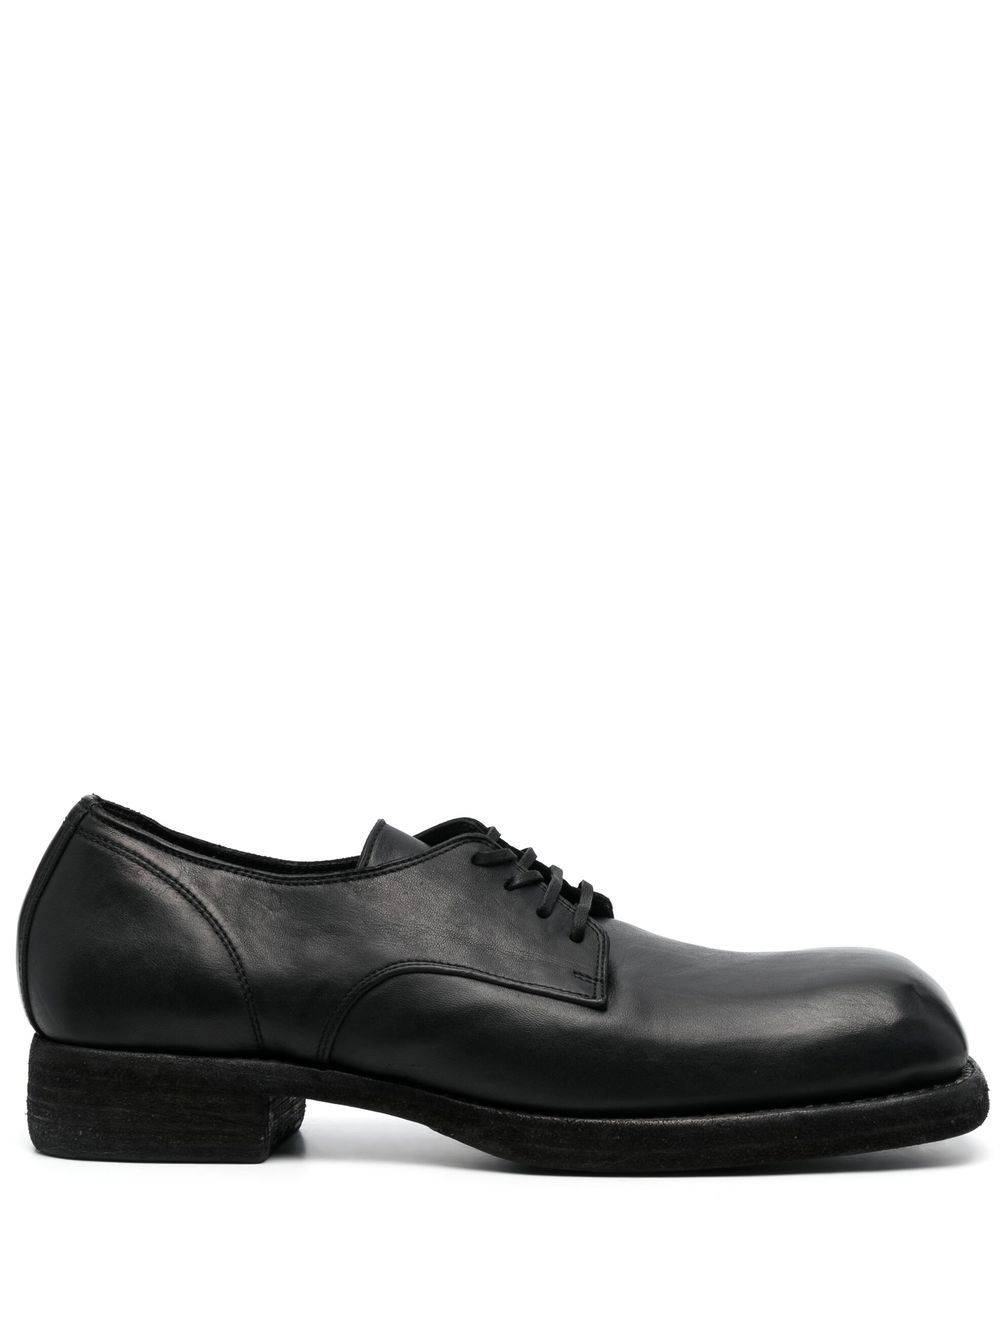 Guidi lace-up leather shoes - Black von Guidi